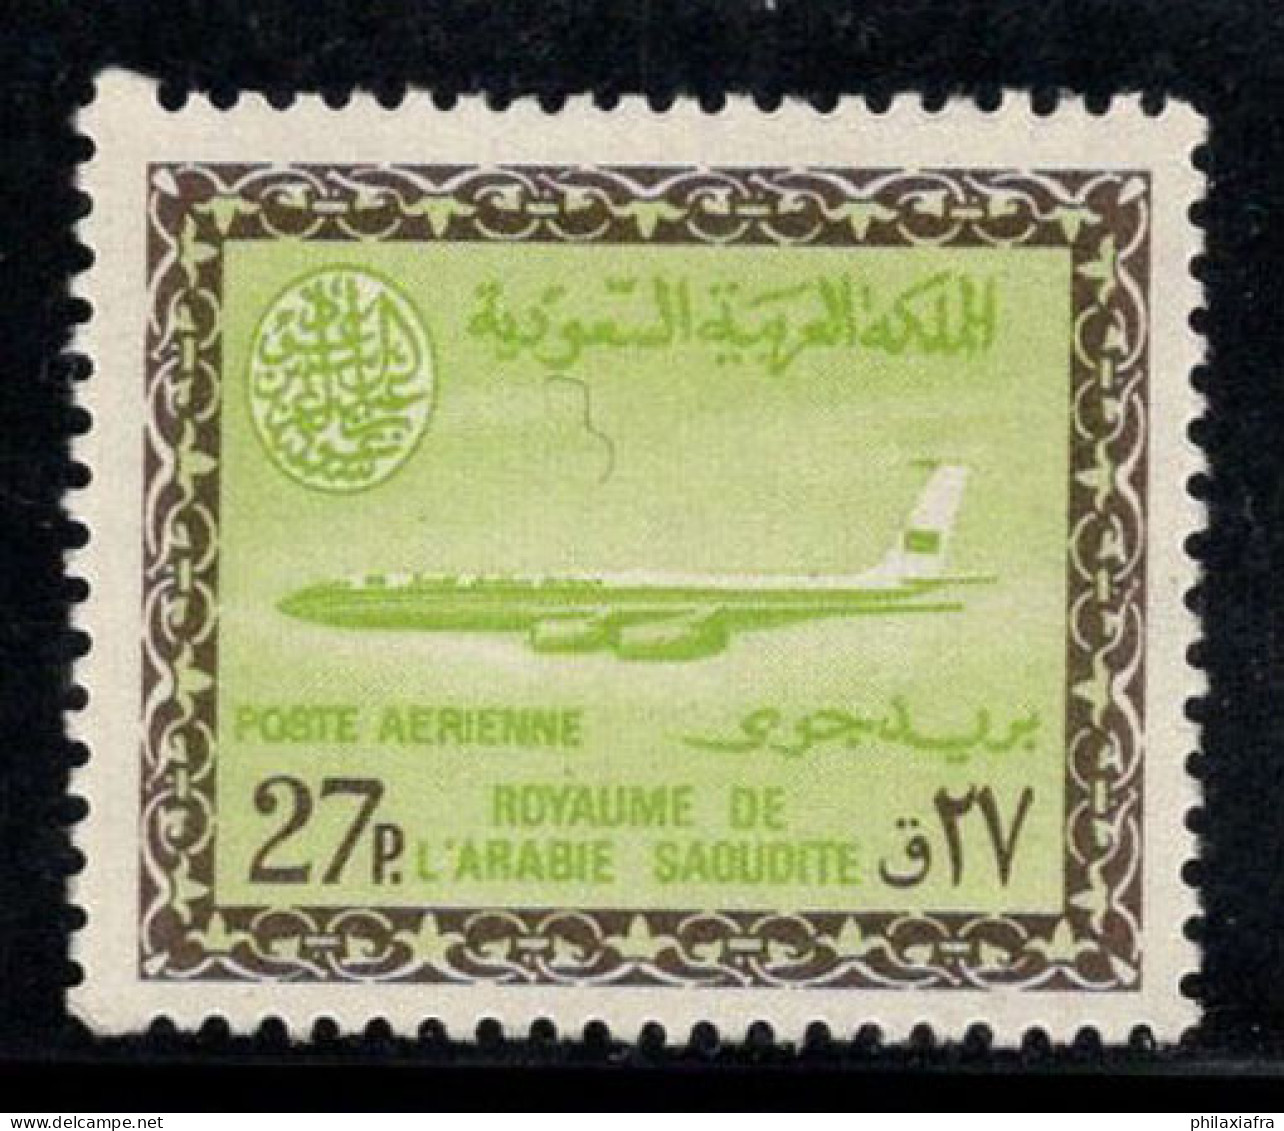 Arabie Saoudite 1965-72 Mi. 264 Neuf ** 100% Poste Aérienne 27 Pia, Boeing 720 B - Saudi Arabia